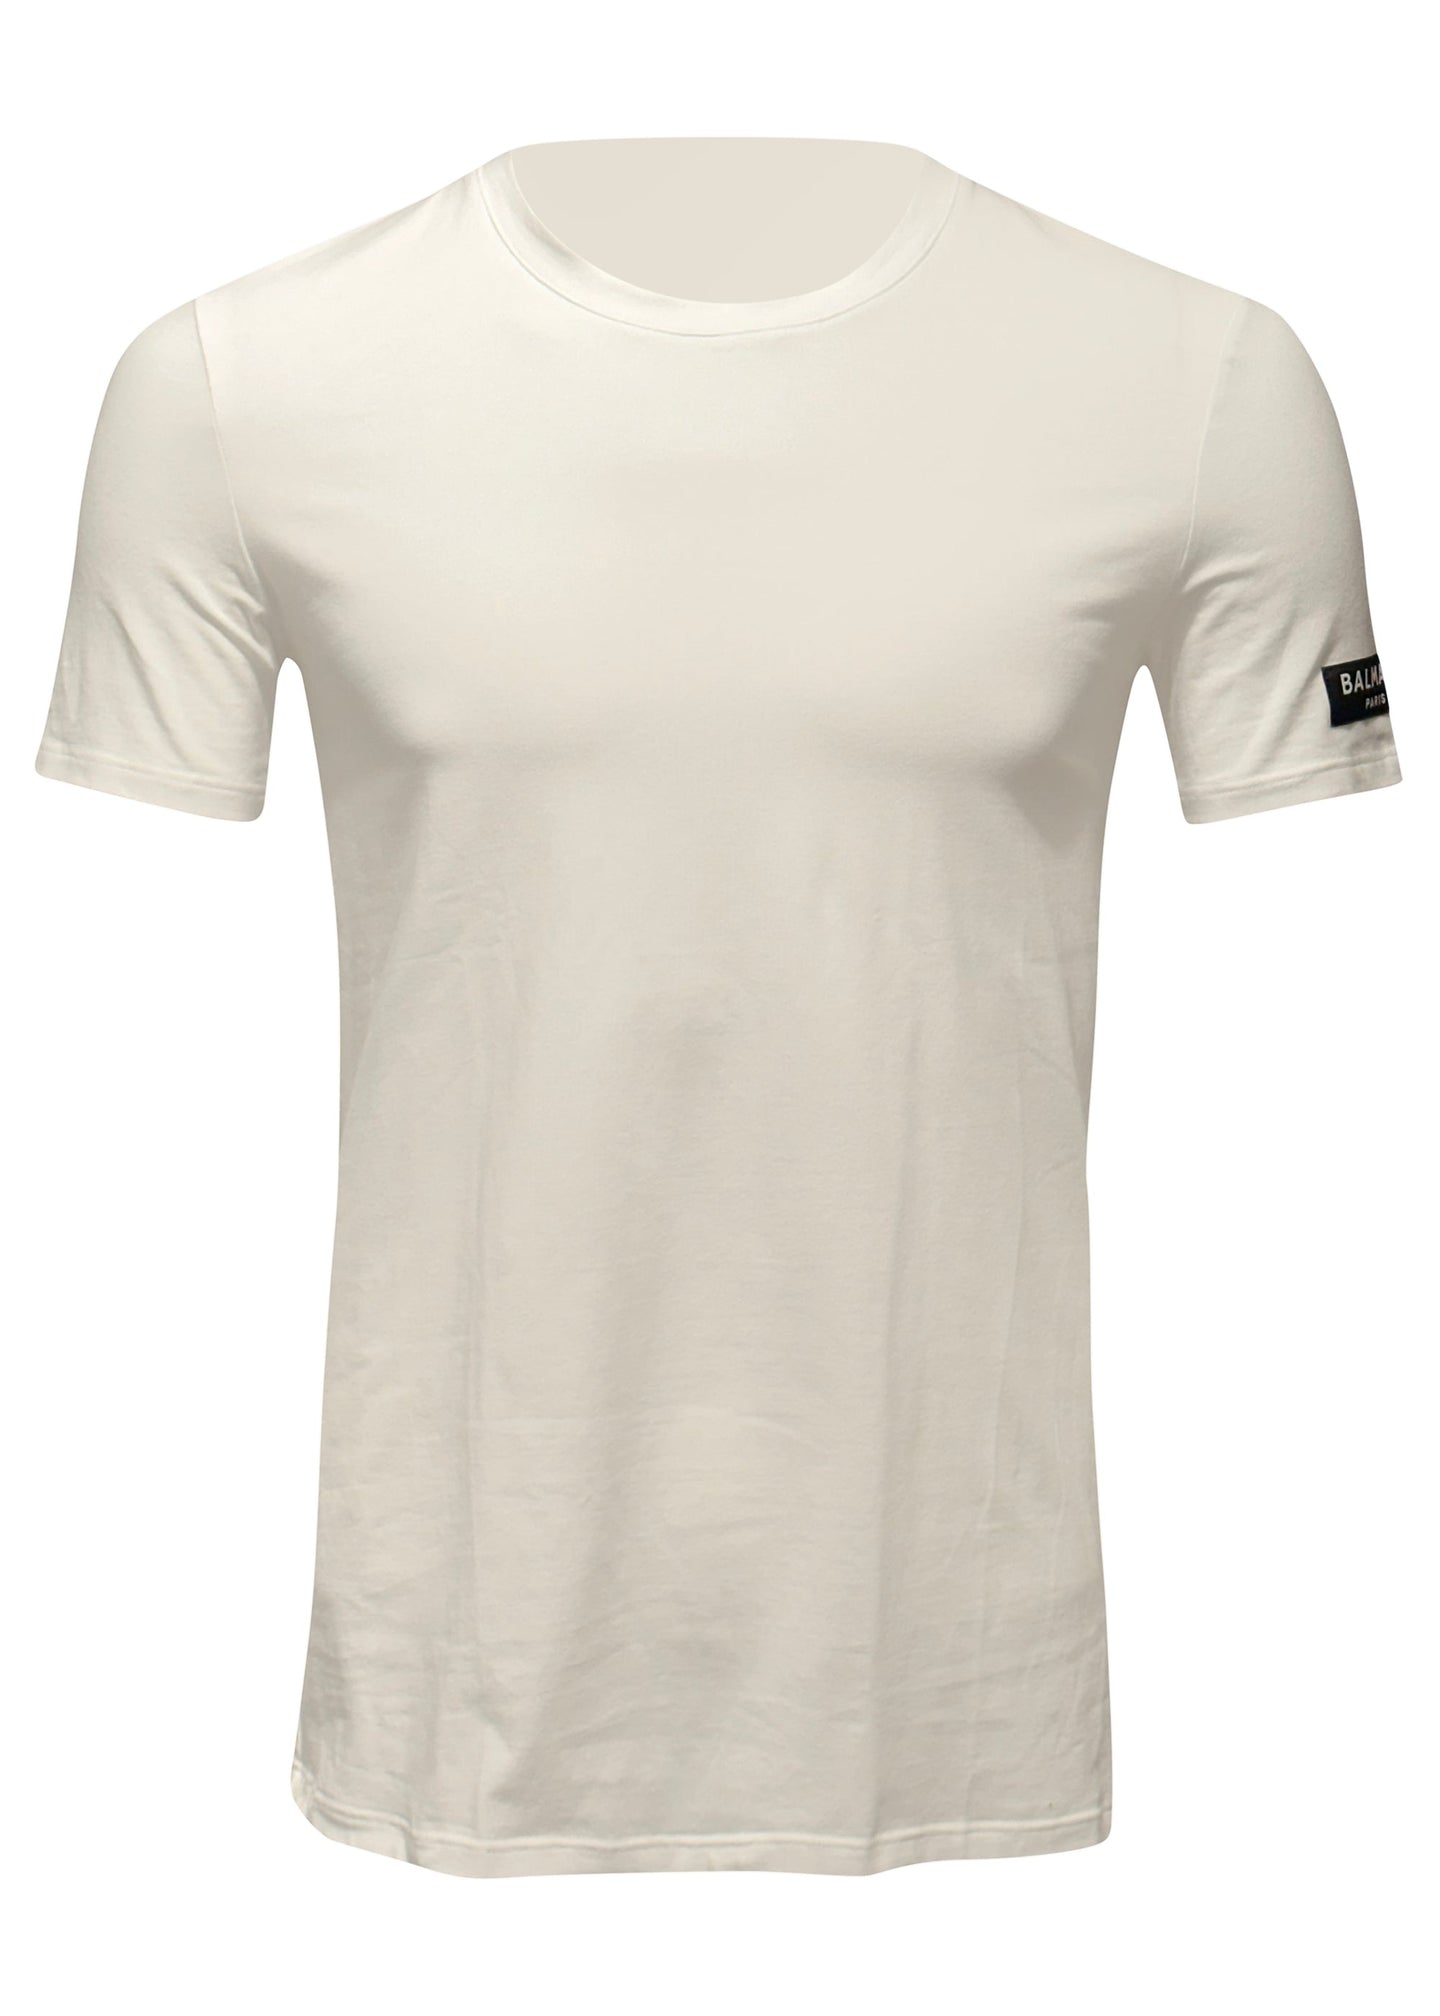 Balmain - Crewneck Iconic Logo On Arm T-Shirt - 200334 - White